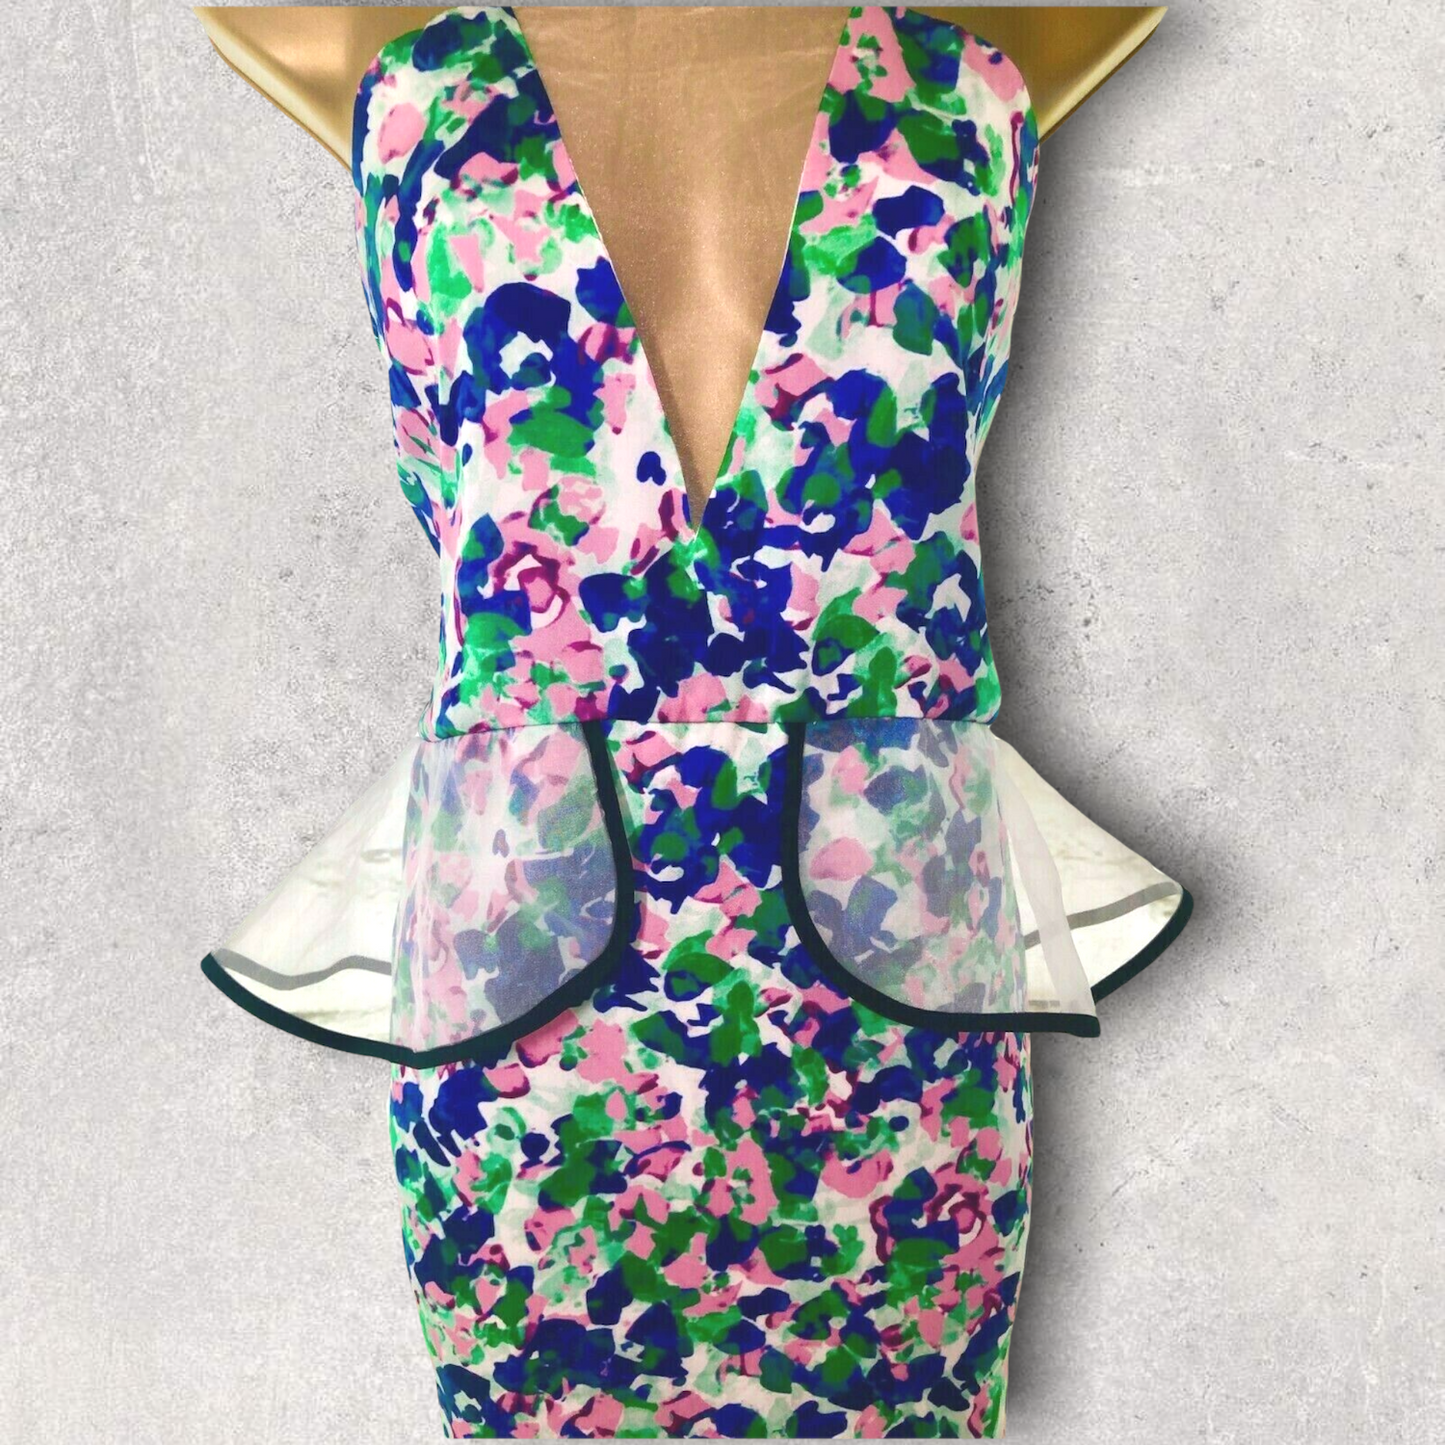 Alice McCall Fleur Blossoms Organza Peplum Dress UK 10 US 6 EU 38 BNWT RRP £245 Timeless Fashions